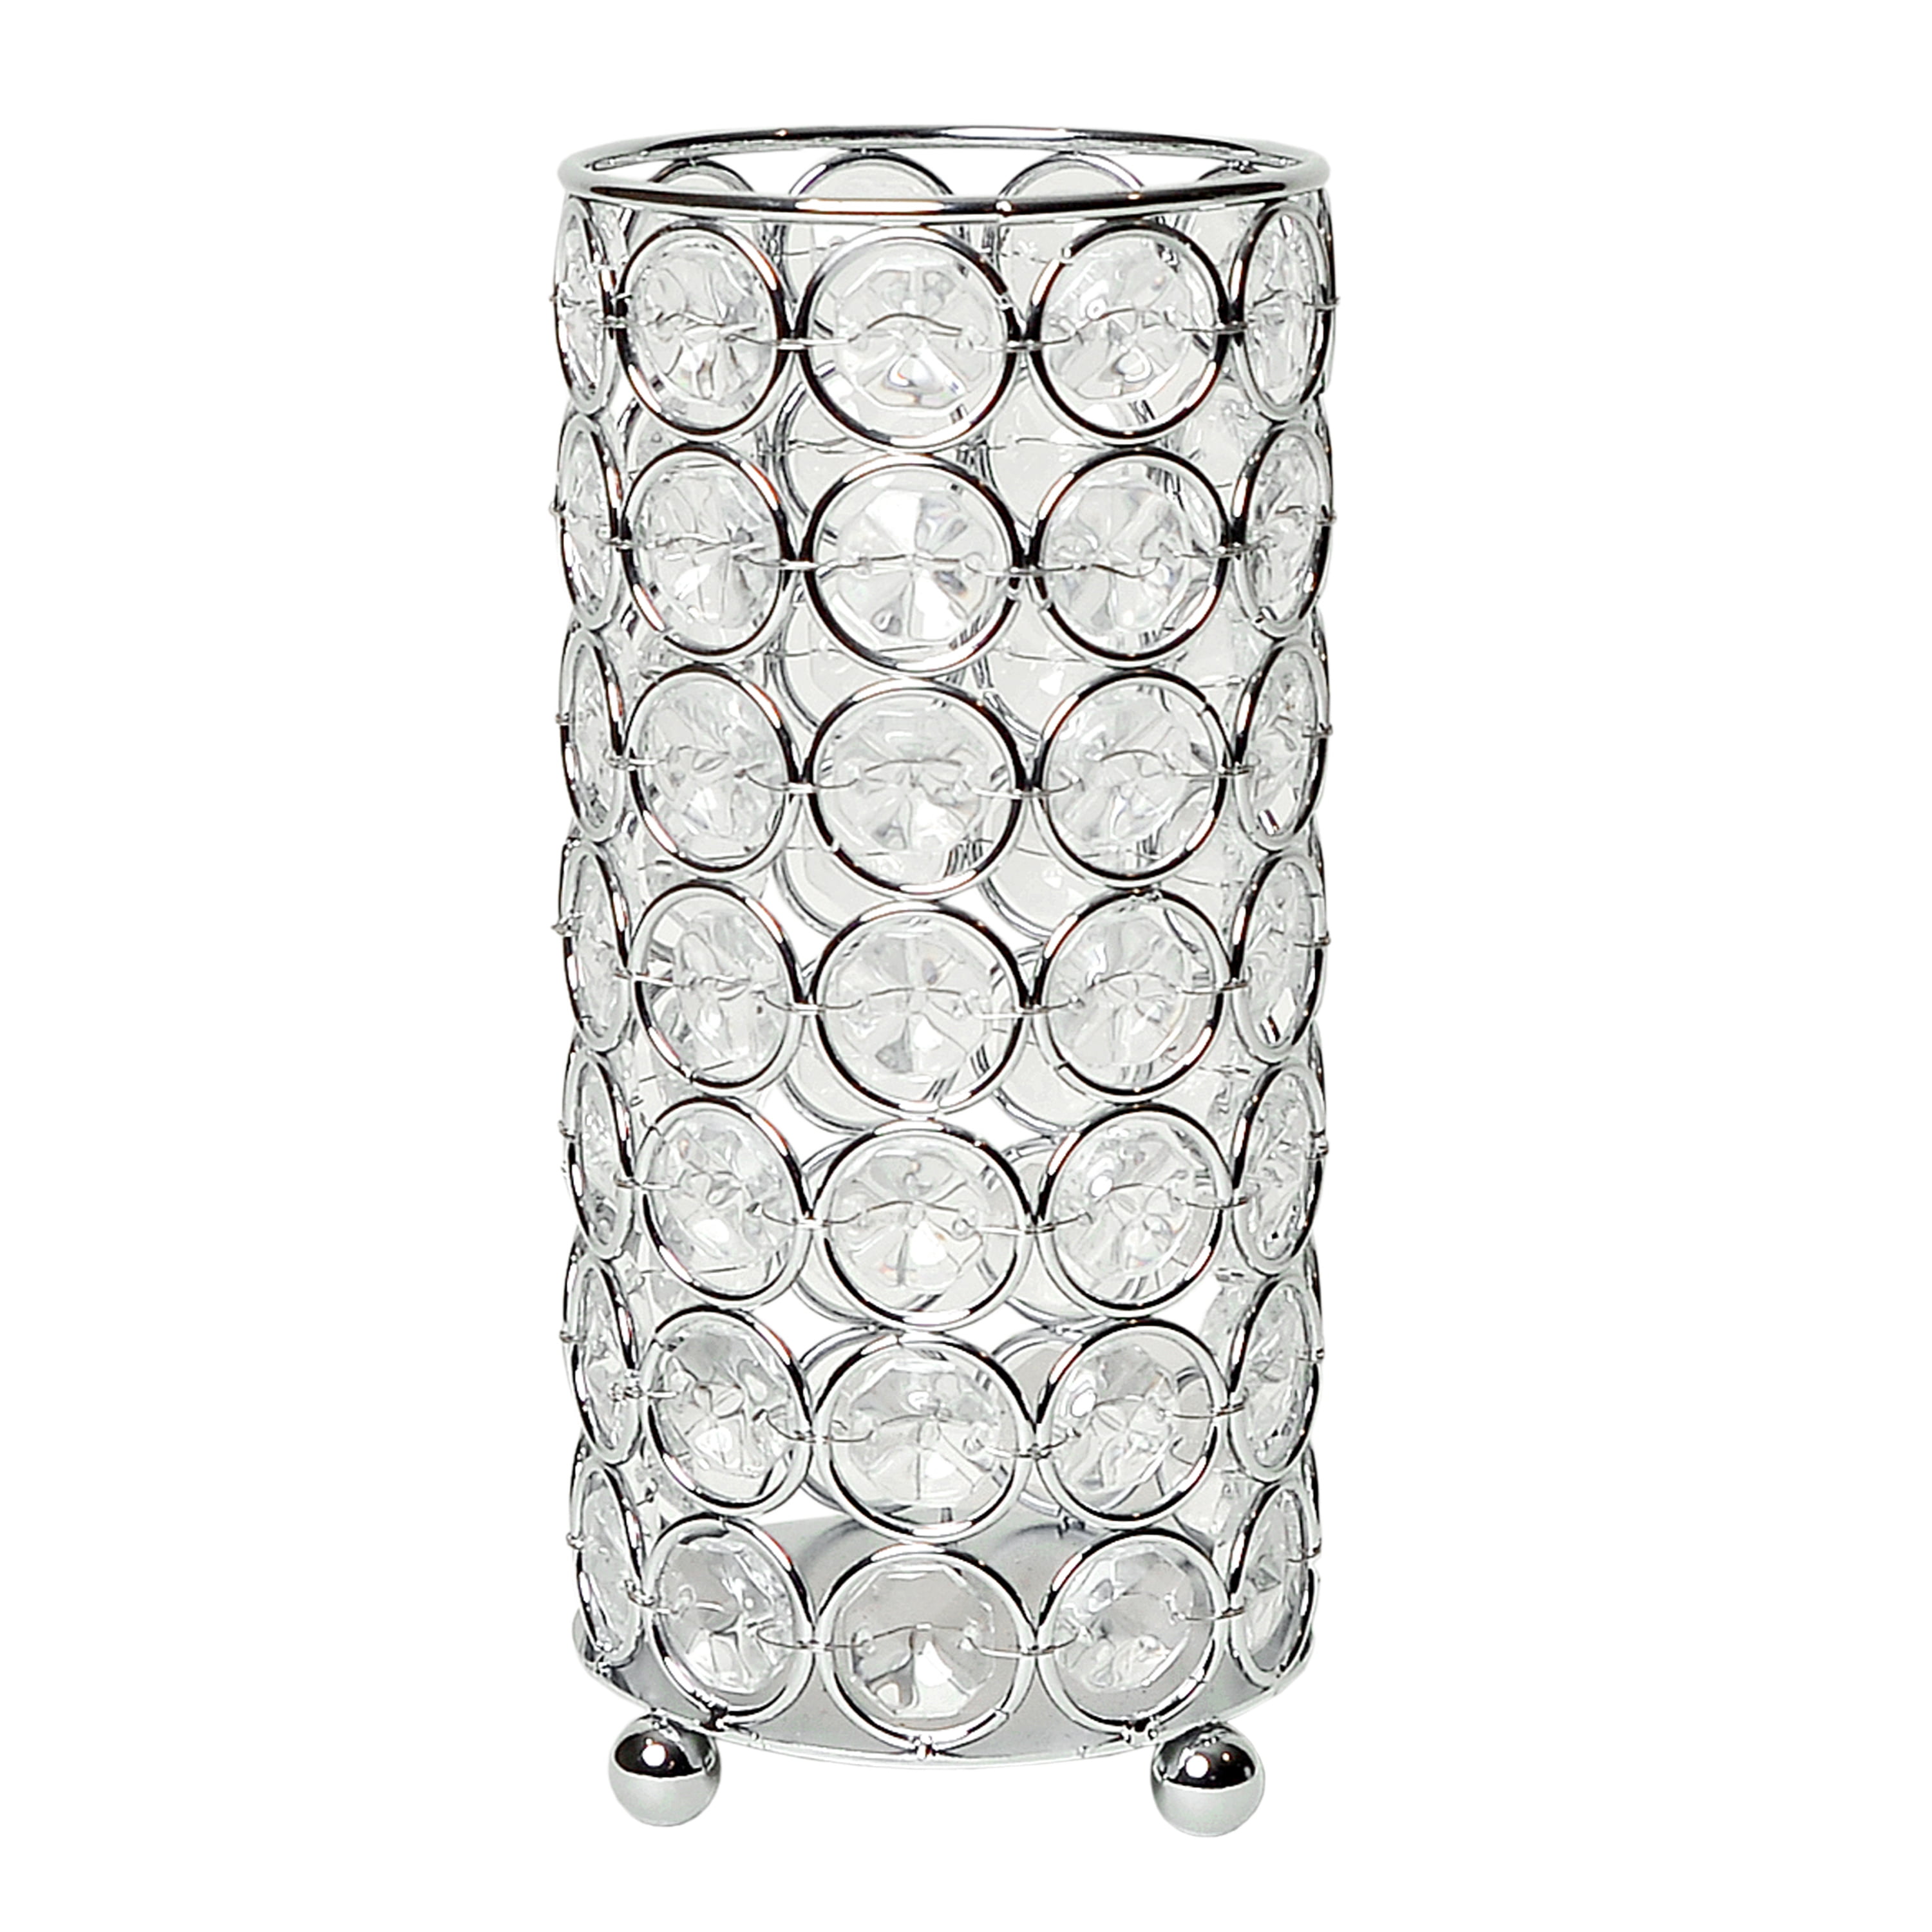 Elegant Designs Hg1002-chr 6.75 In. Elipse Crystal Decorative Flower Vase, Candle Holder, Wedding Centerpiece - Chrome